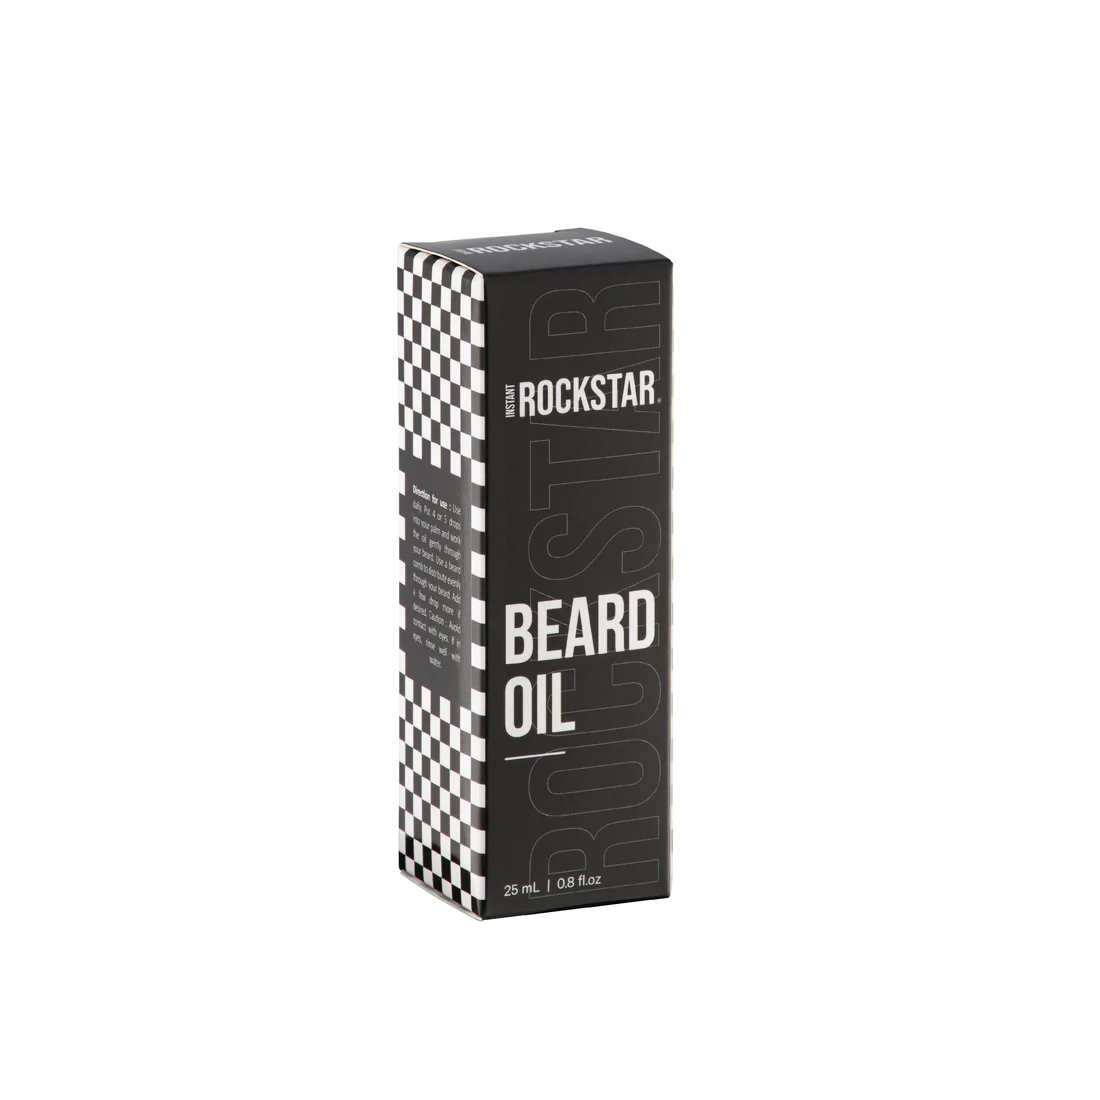 Instant Rockstar Beard Oil - 25ml